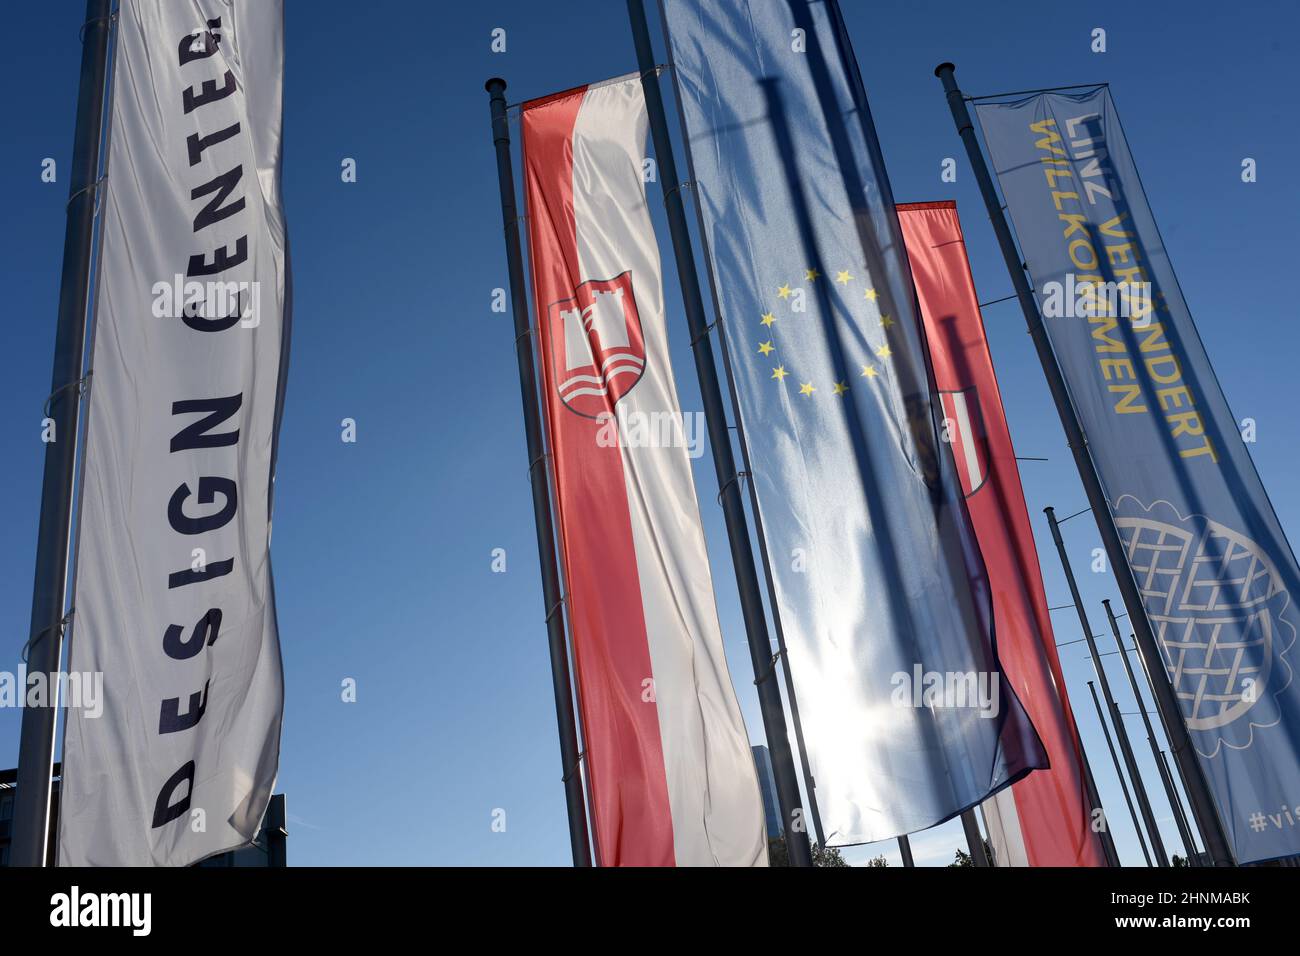 Flaggen vor dem Ausstellungs- und Veranstaltungszentrum 'Design Centre' en Linz, Österreich, Europa - Banderas frente al centro de exposiciones y eventos 'Design Centre' en Linz, Austria, Europa Foto de stock